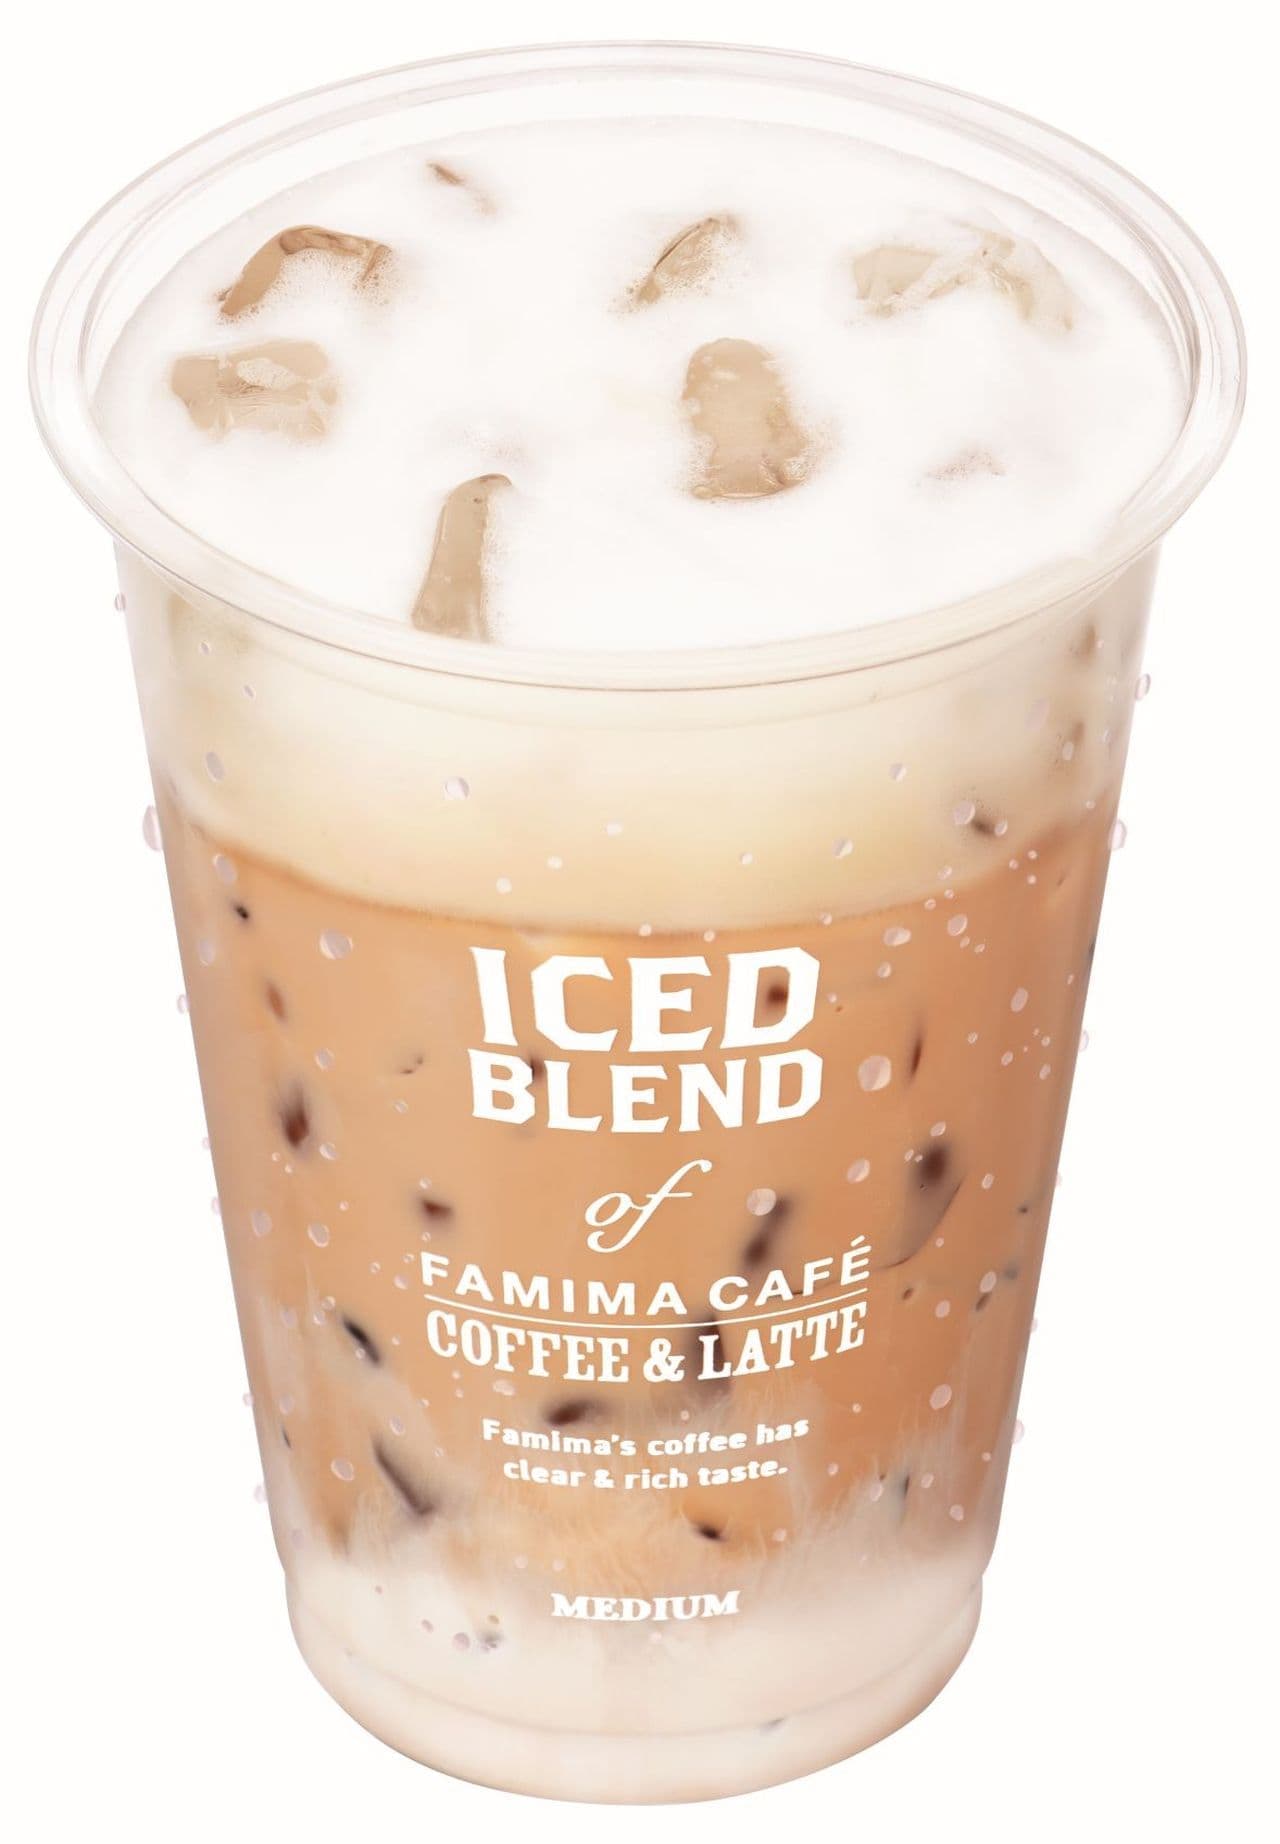 Famima Cafe "Iced Cafe Latte